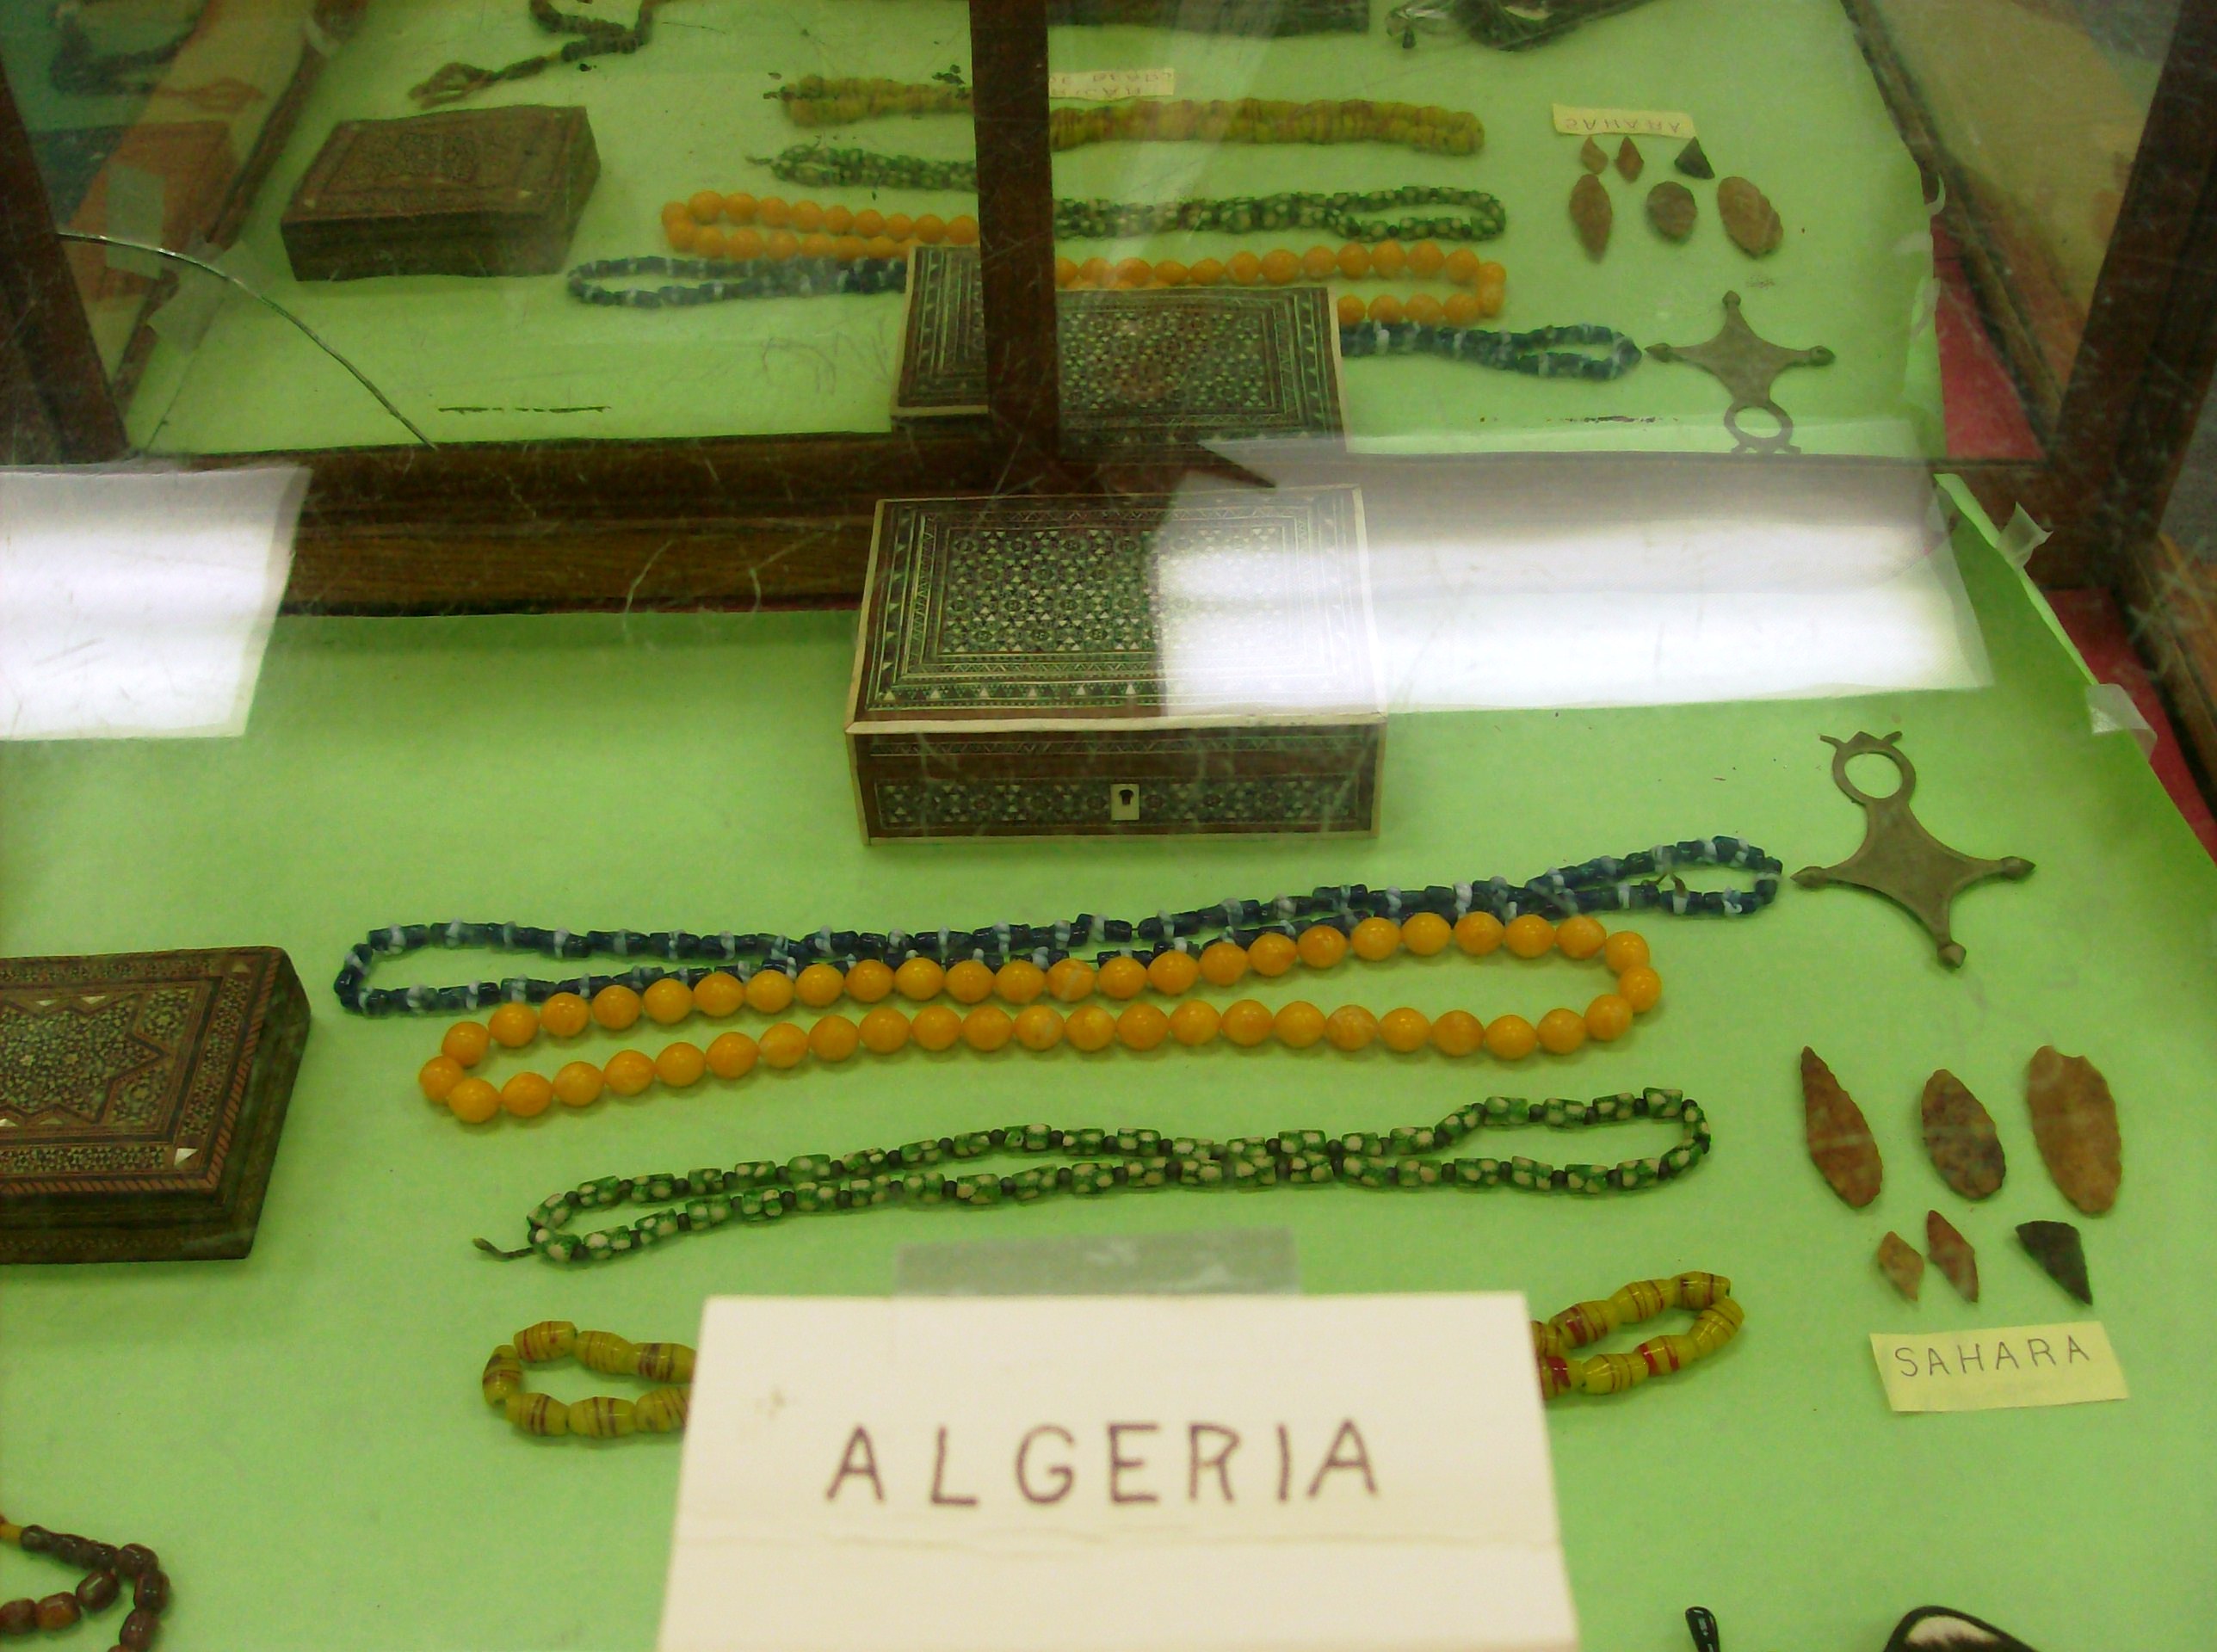 Display box of Alegerian artifacts